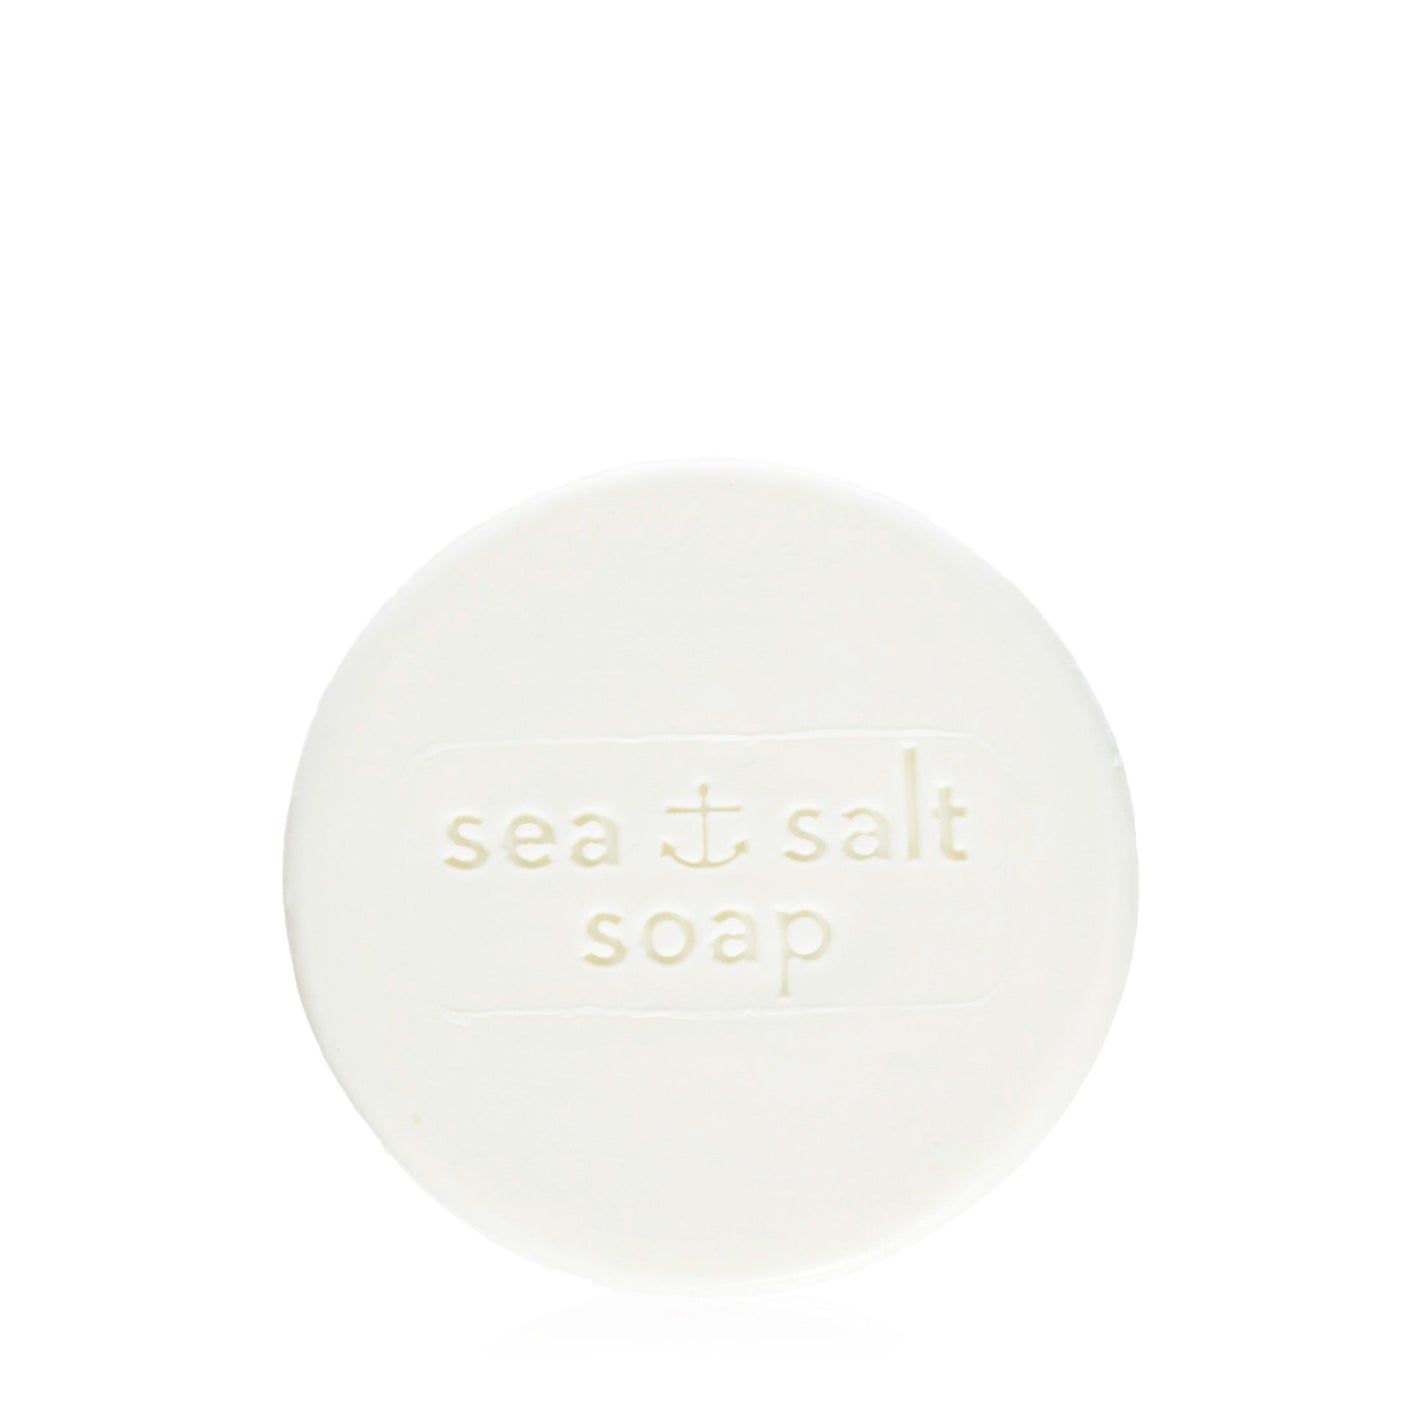 Kalastyle Sea Salt Soap